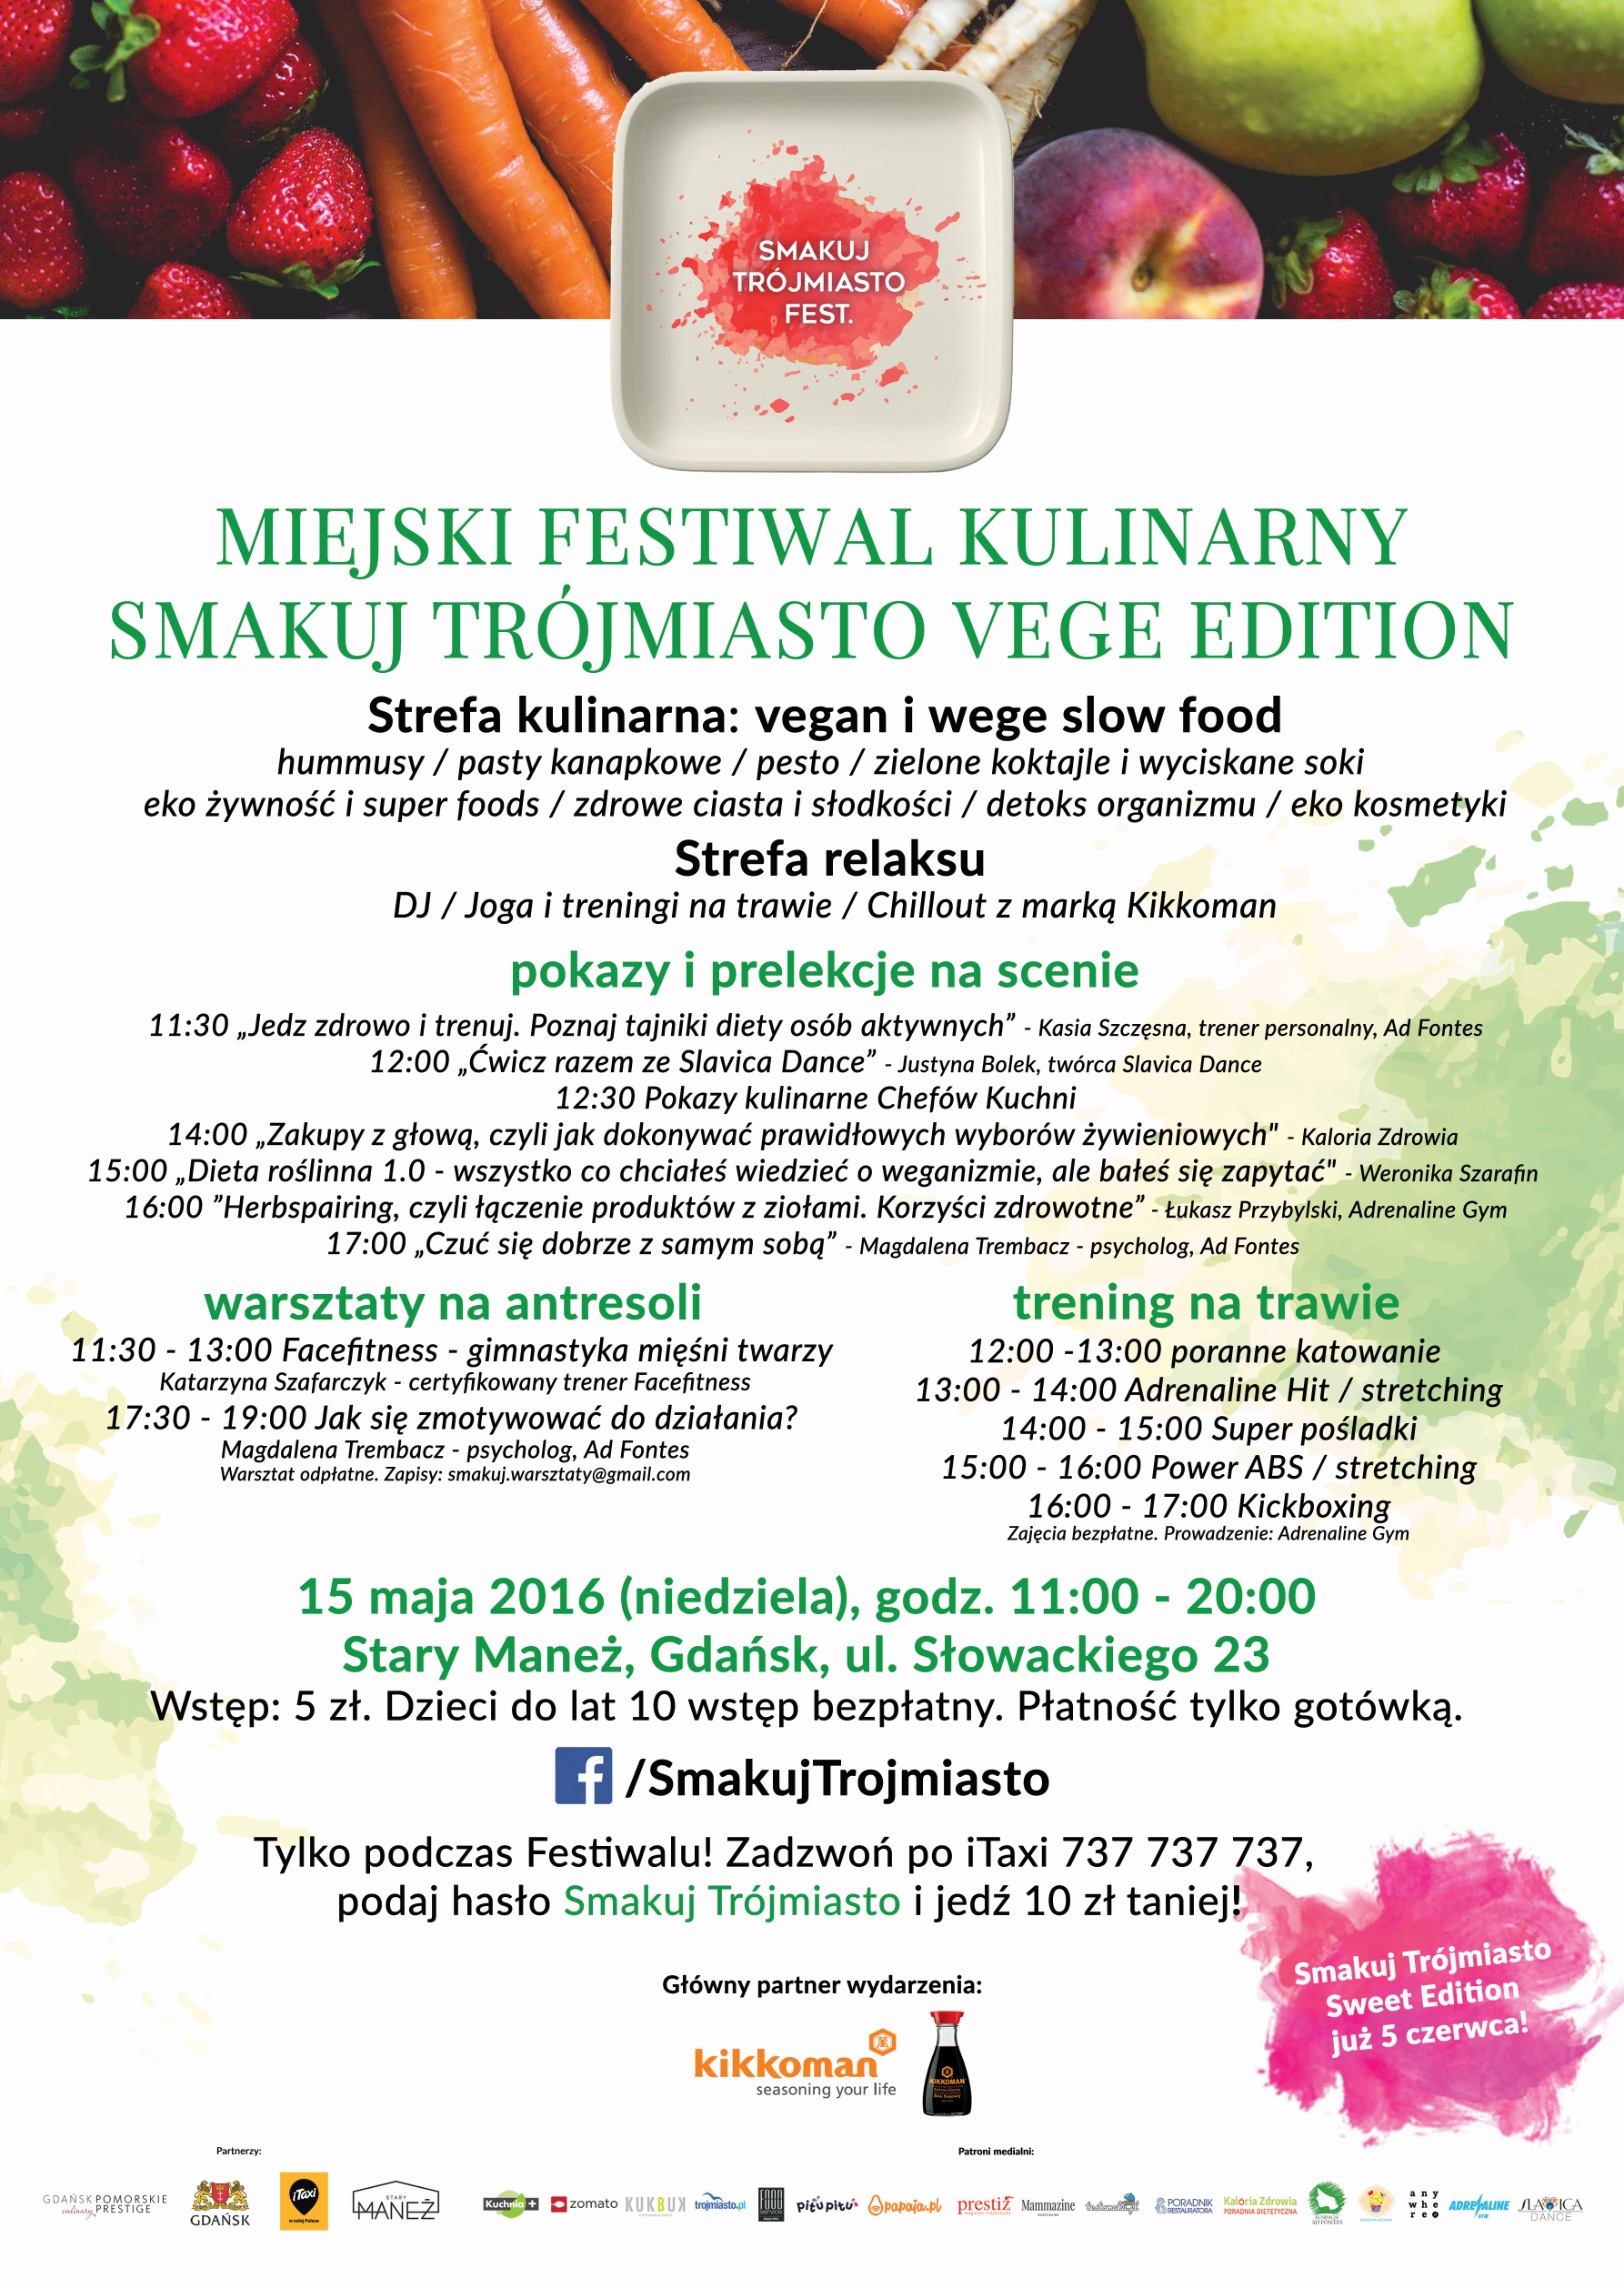 Miejski Festiwal Kulinarny Smakuj Trójmiasto VEGE EDITION